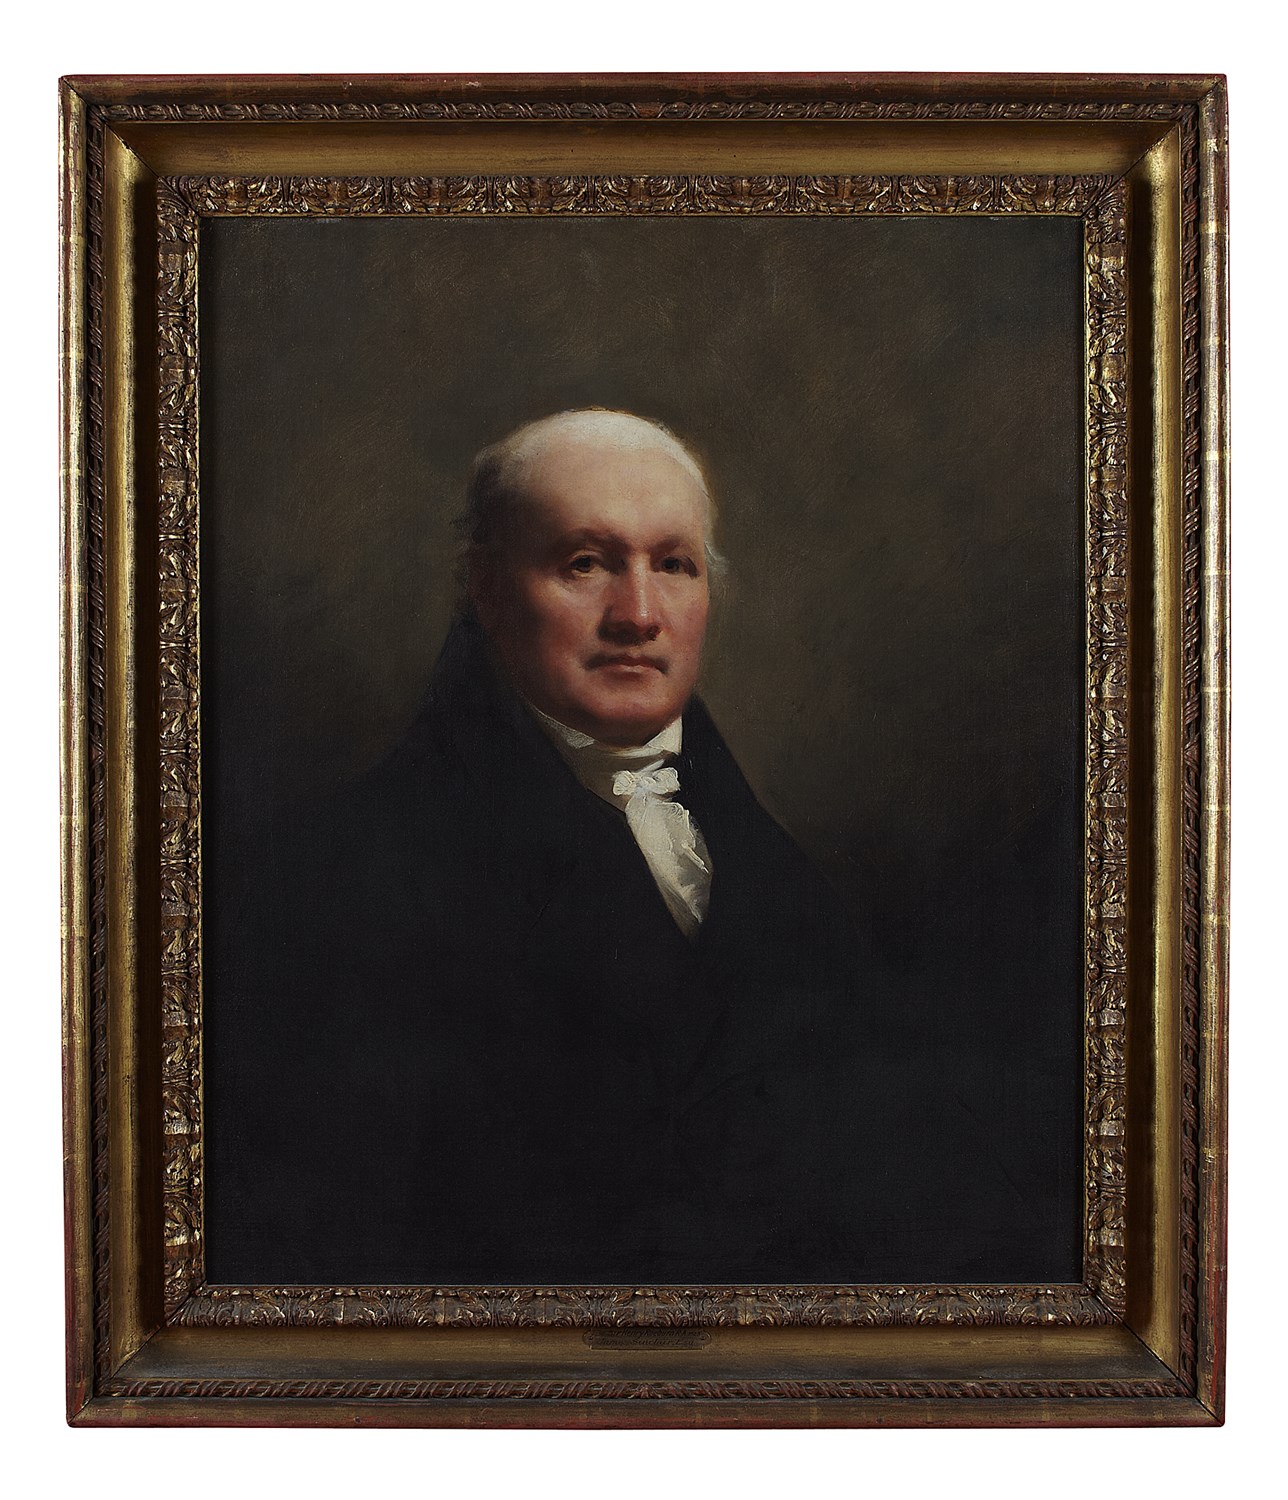 Lot 114 - ATTRIBUTED TO SIR HENRY RAEBURN  R.A (SCOTTISH 1756-1823)